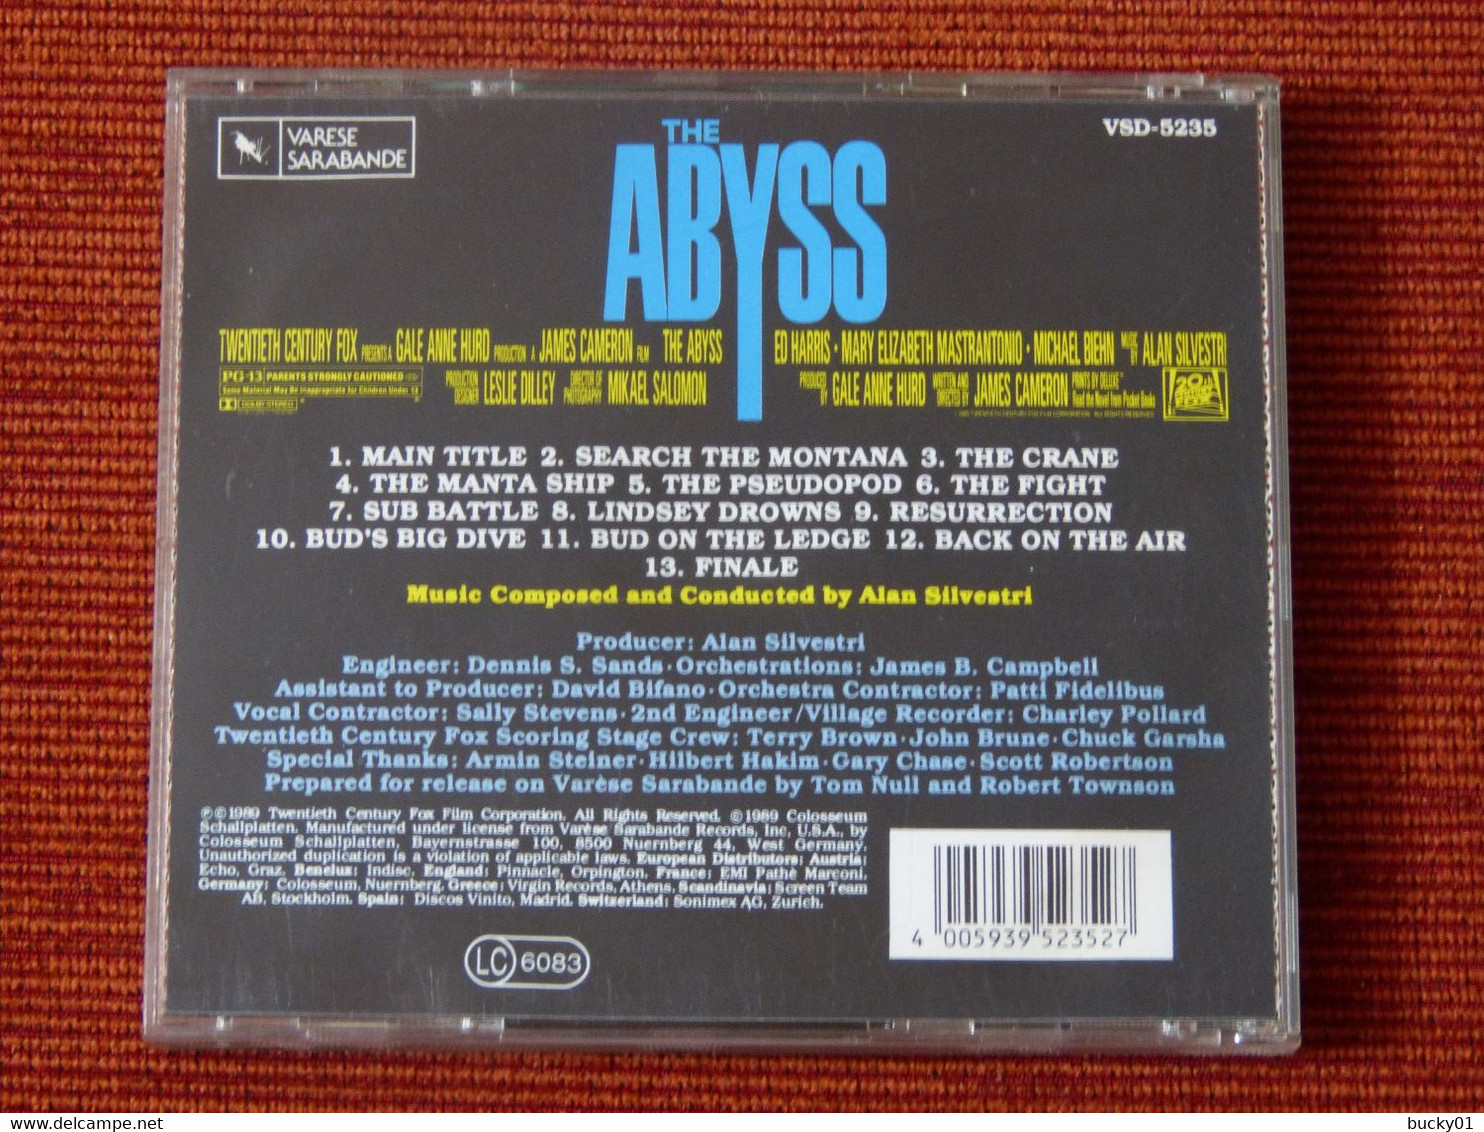 CD BOF/OST - ABYSS - ALAN SILVESTRI - VSD 5235 - 1989 - Musica Di Film